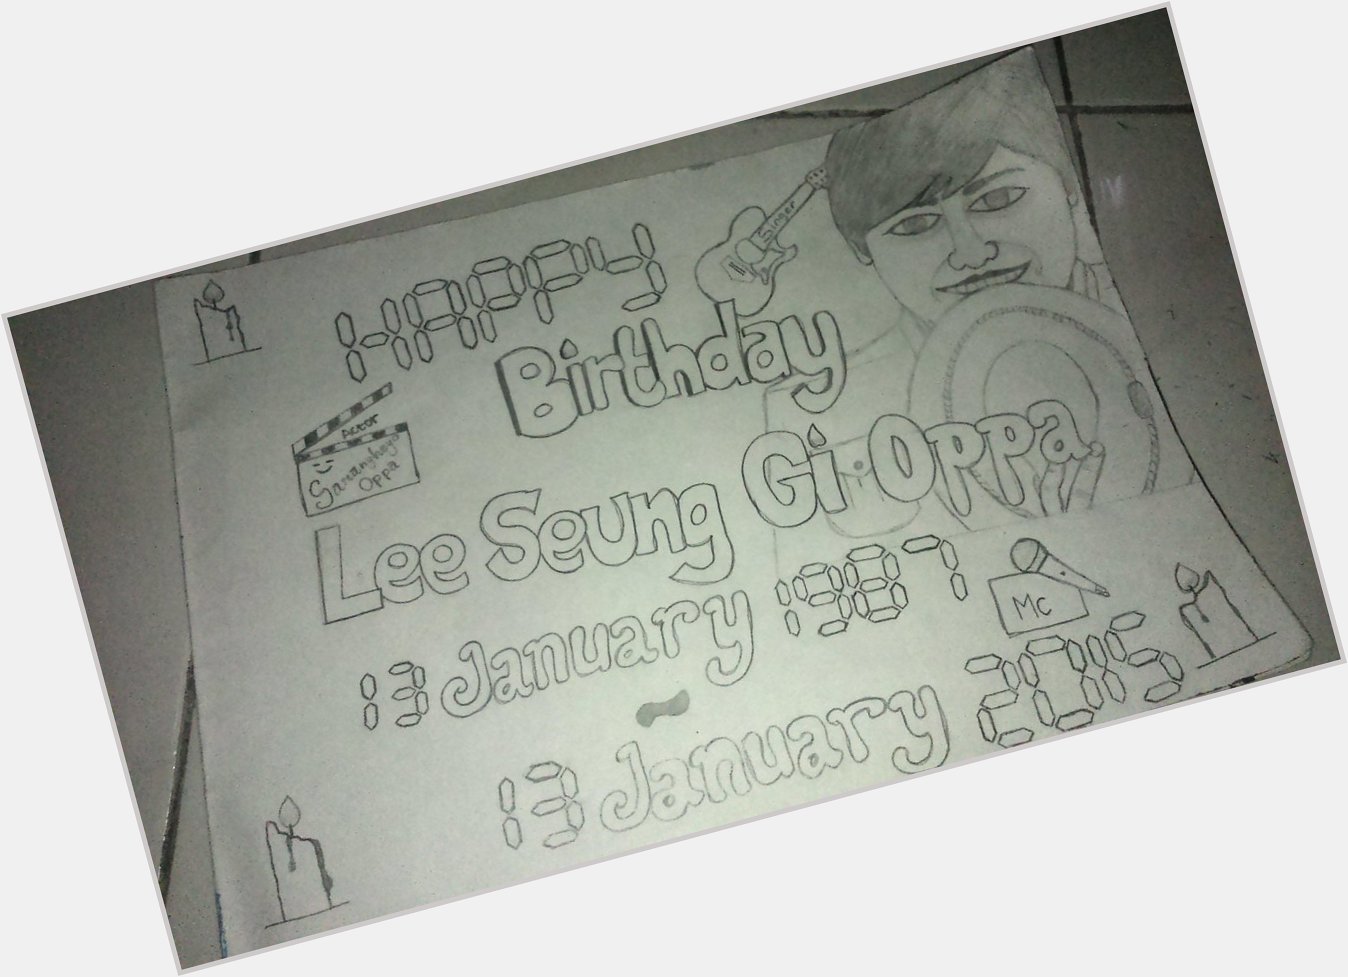 Happy birthday Lee Seung Gi Oppa    i wish you all the best n god bless you mian sketsa wajahnya gk mirip 